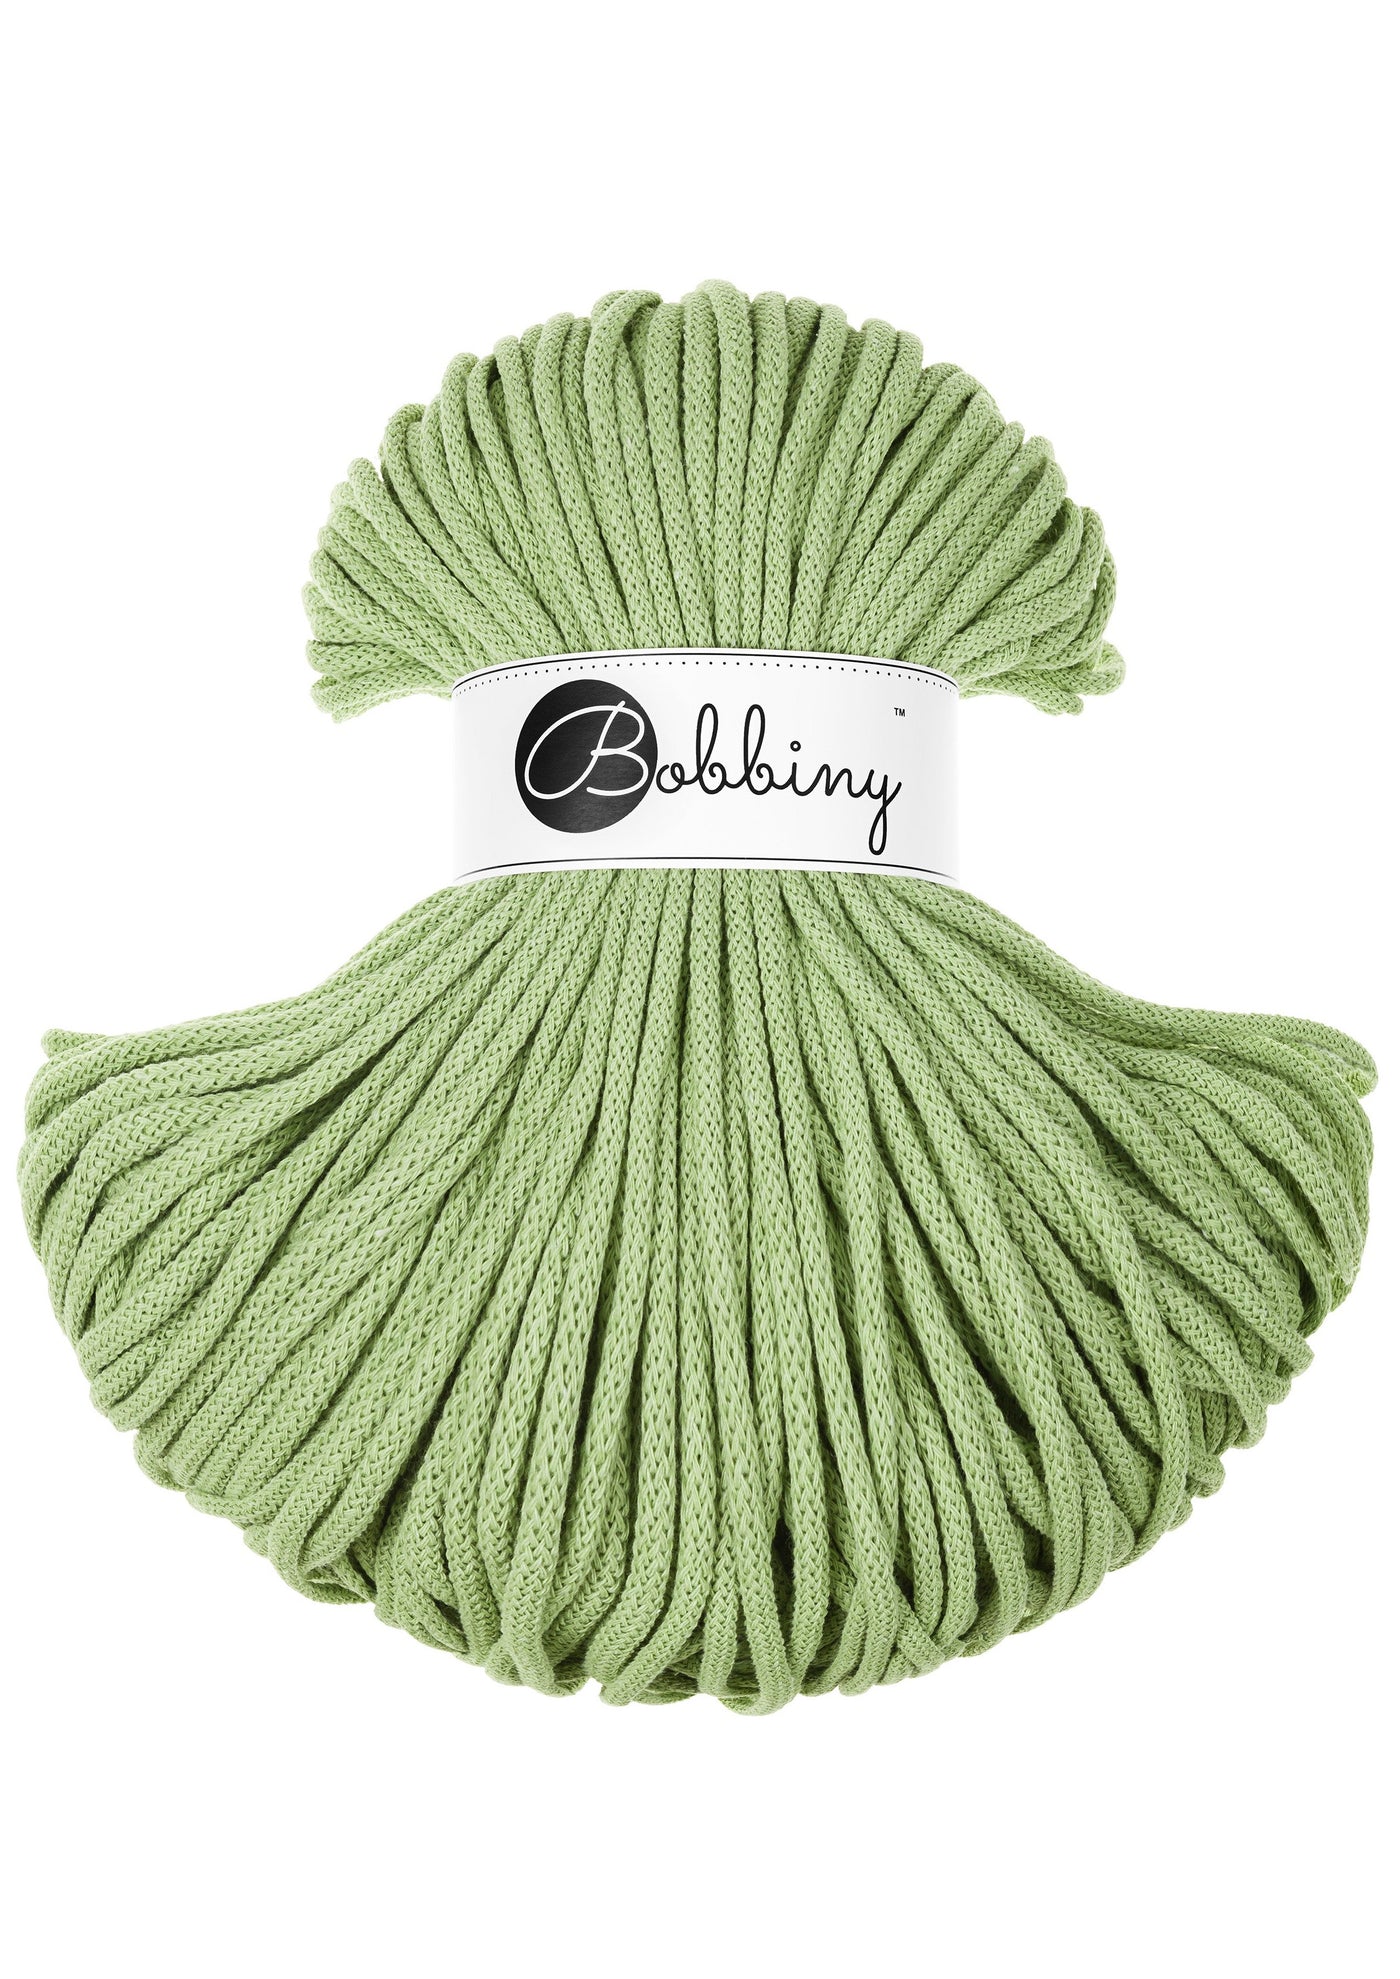 Bobbiny braided cord 5mm in green matcha shade